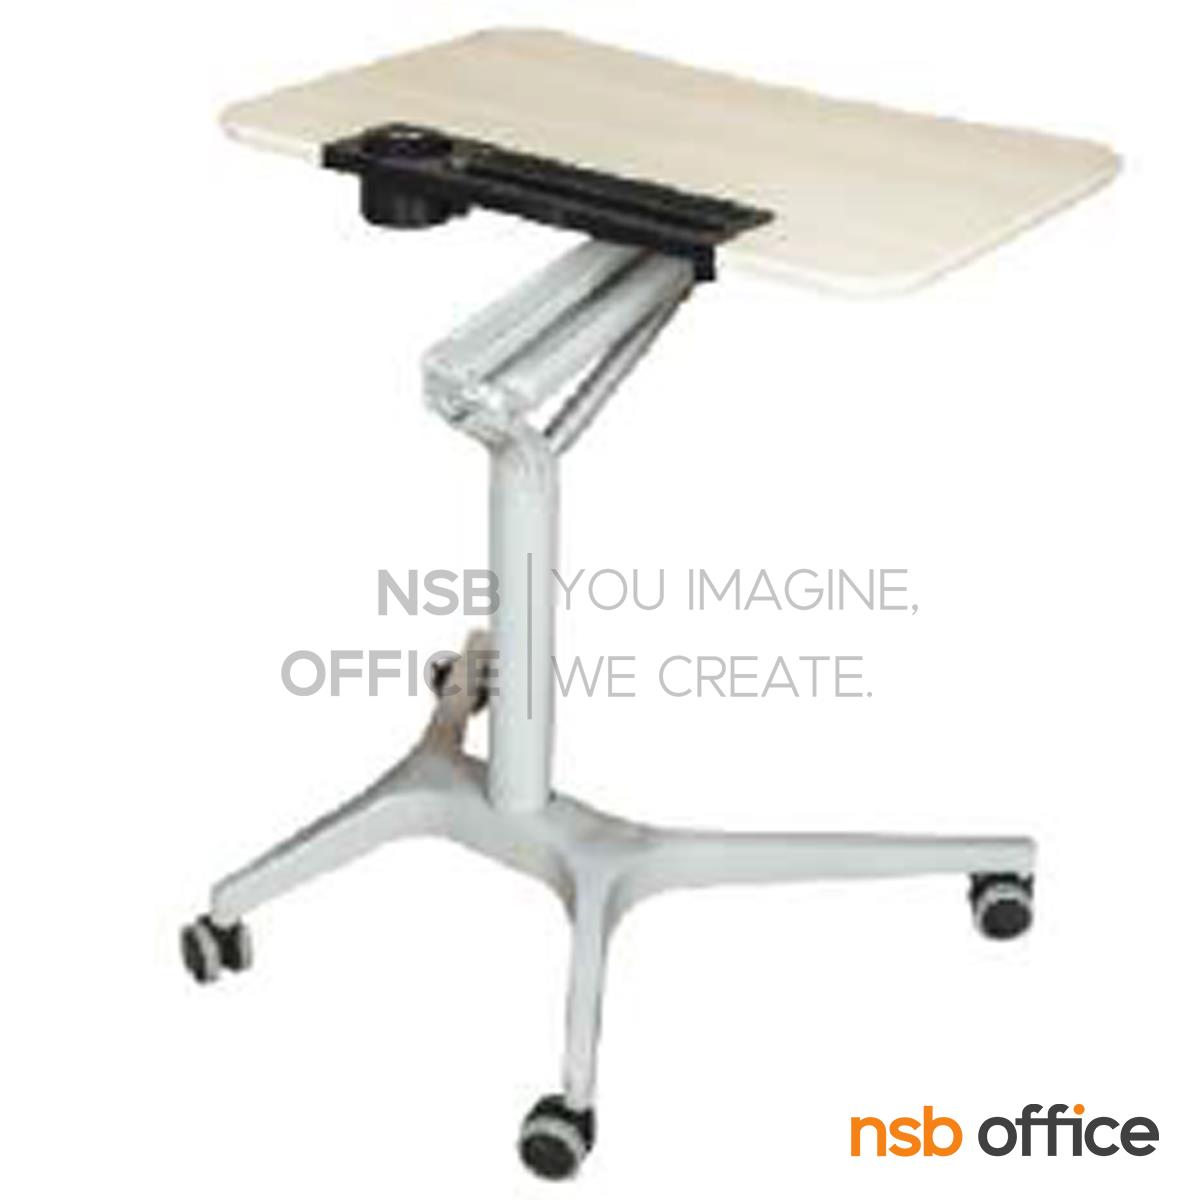 B30A092:โต๊ะวางโน๊ตบุ๊ค โต๊ะอเนกประสงค์ล้อเลื่อน รุ่น Malcolm (มัลคัม)  สามารถปรับระดับได้